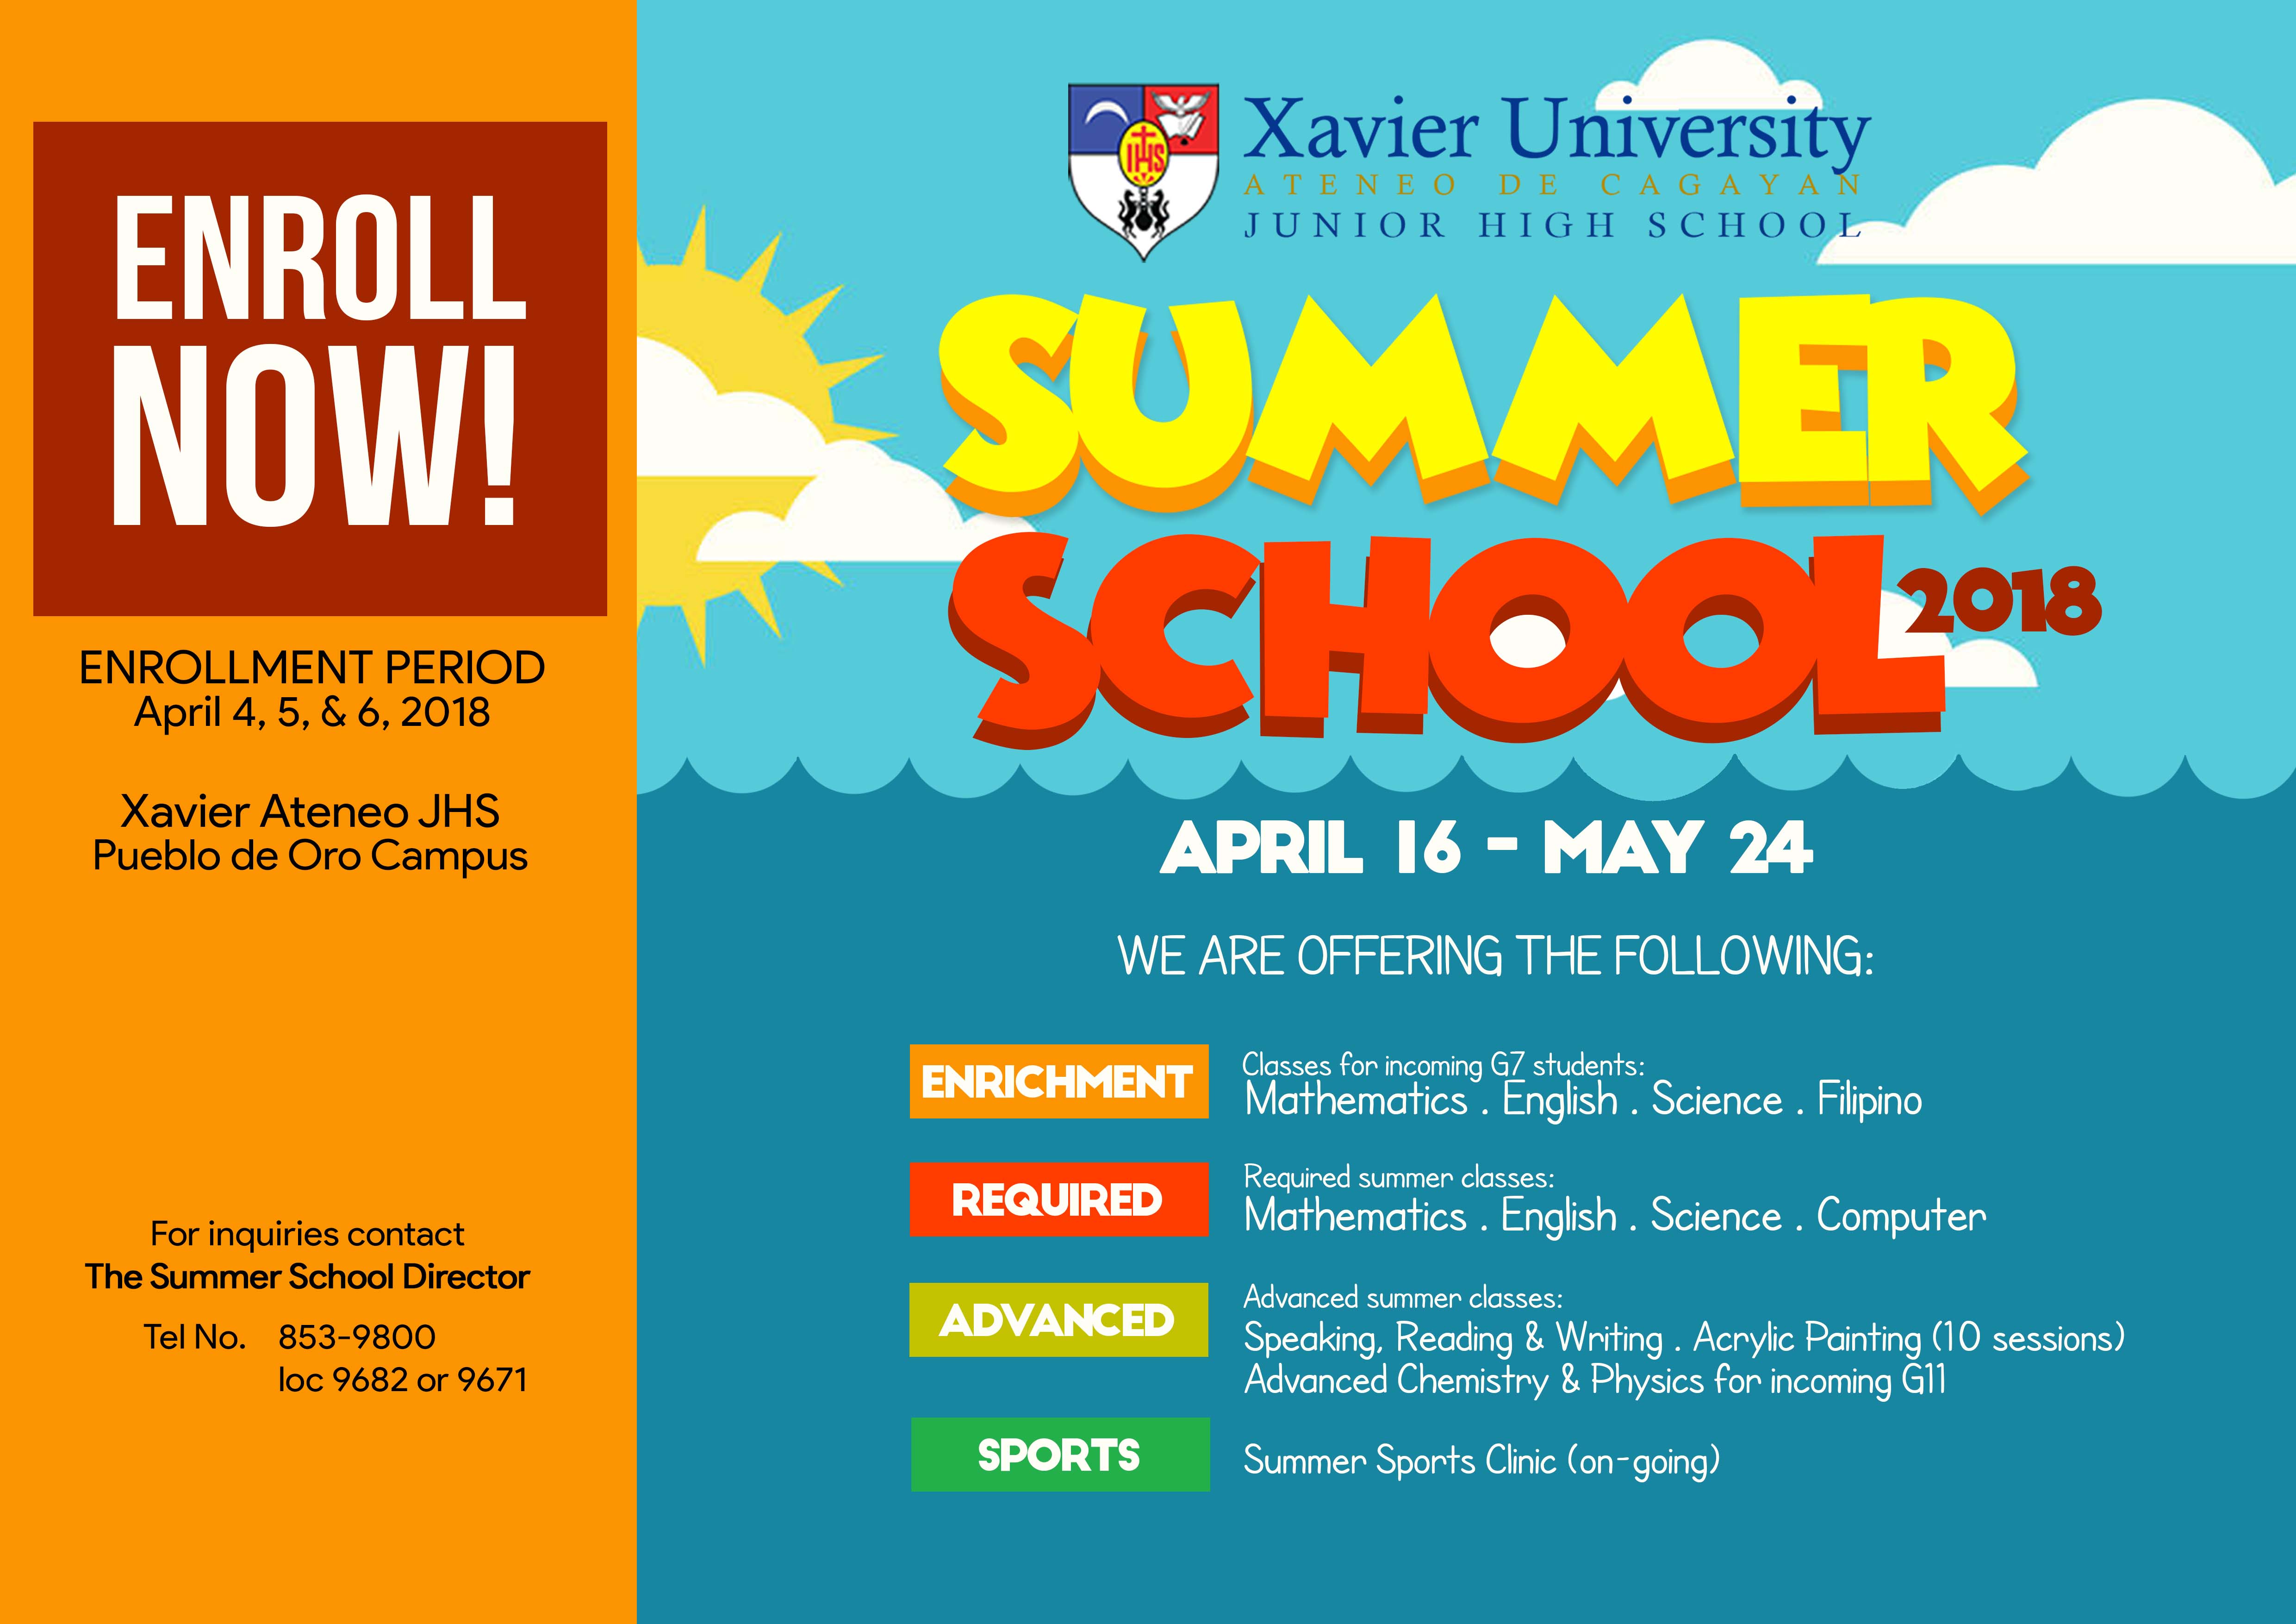 Xavier University - Xavier Ateneo JHS Summer School 2018